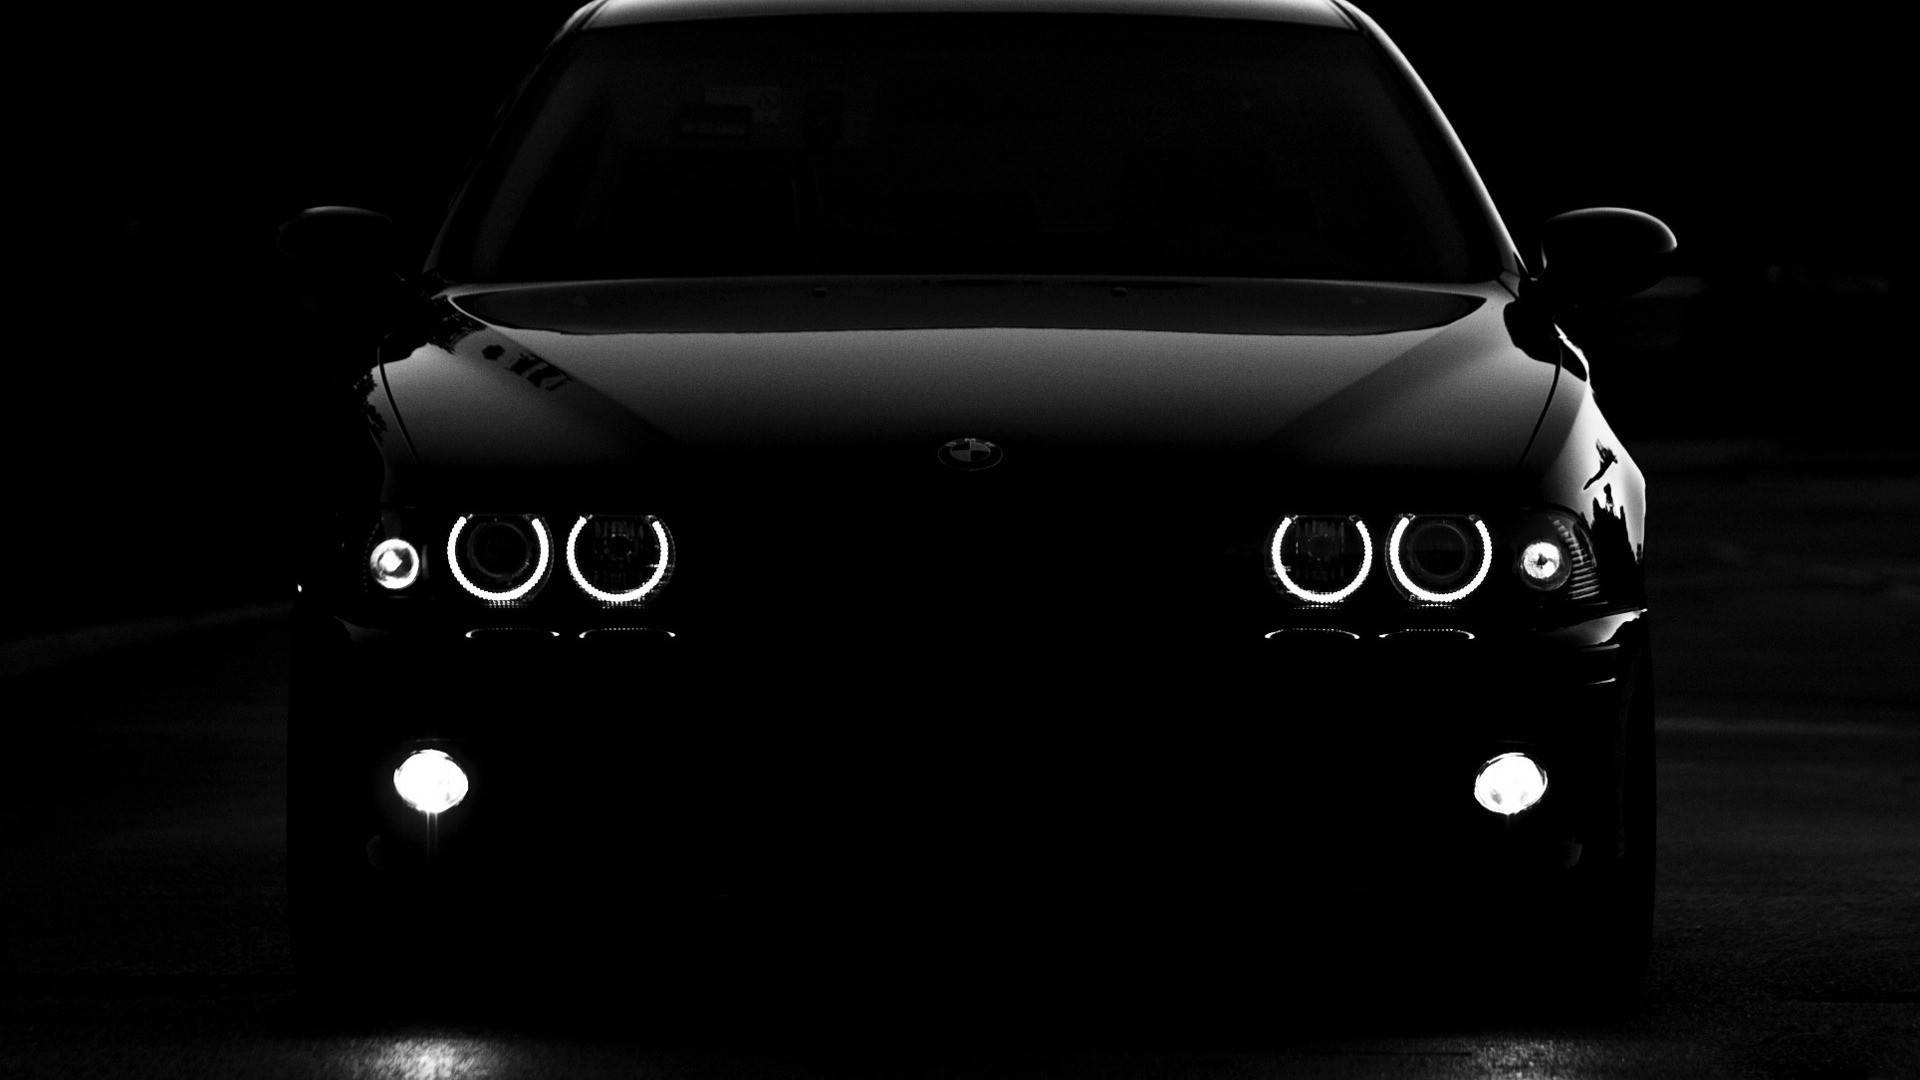 Sleek Black Bmw Car In Night City Scenery Background